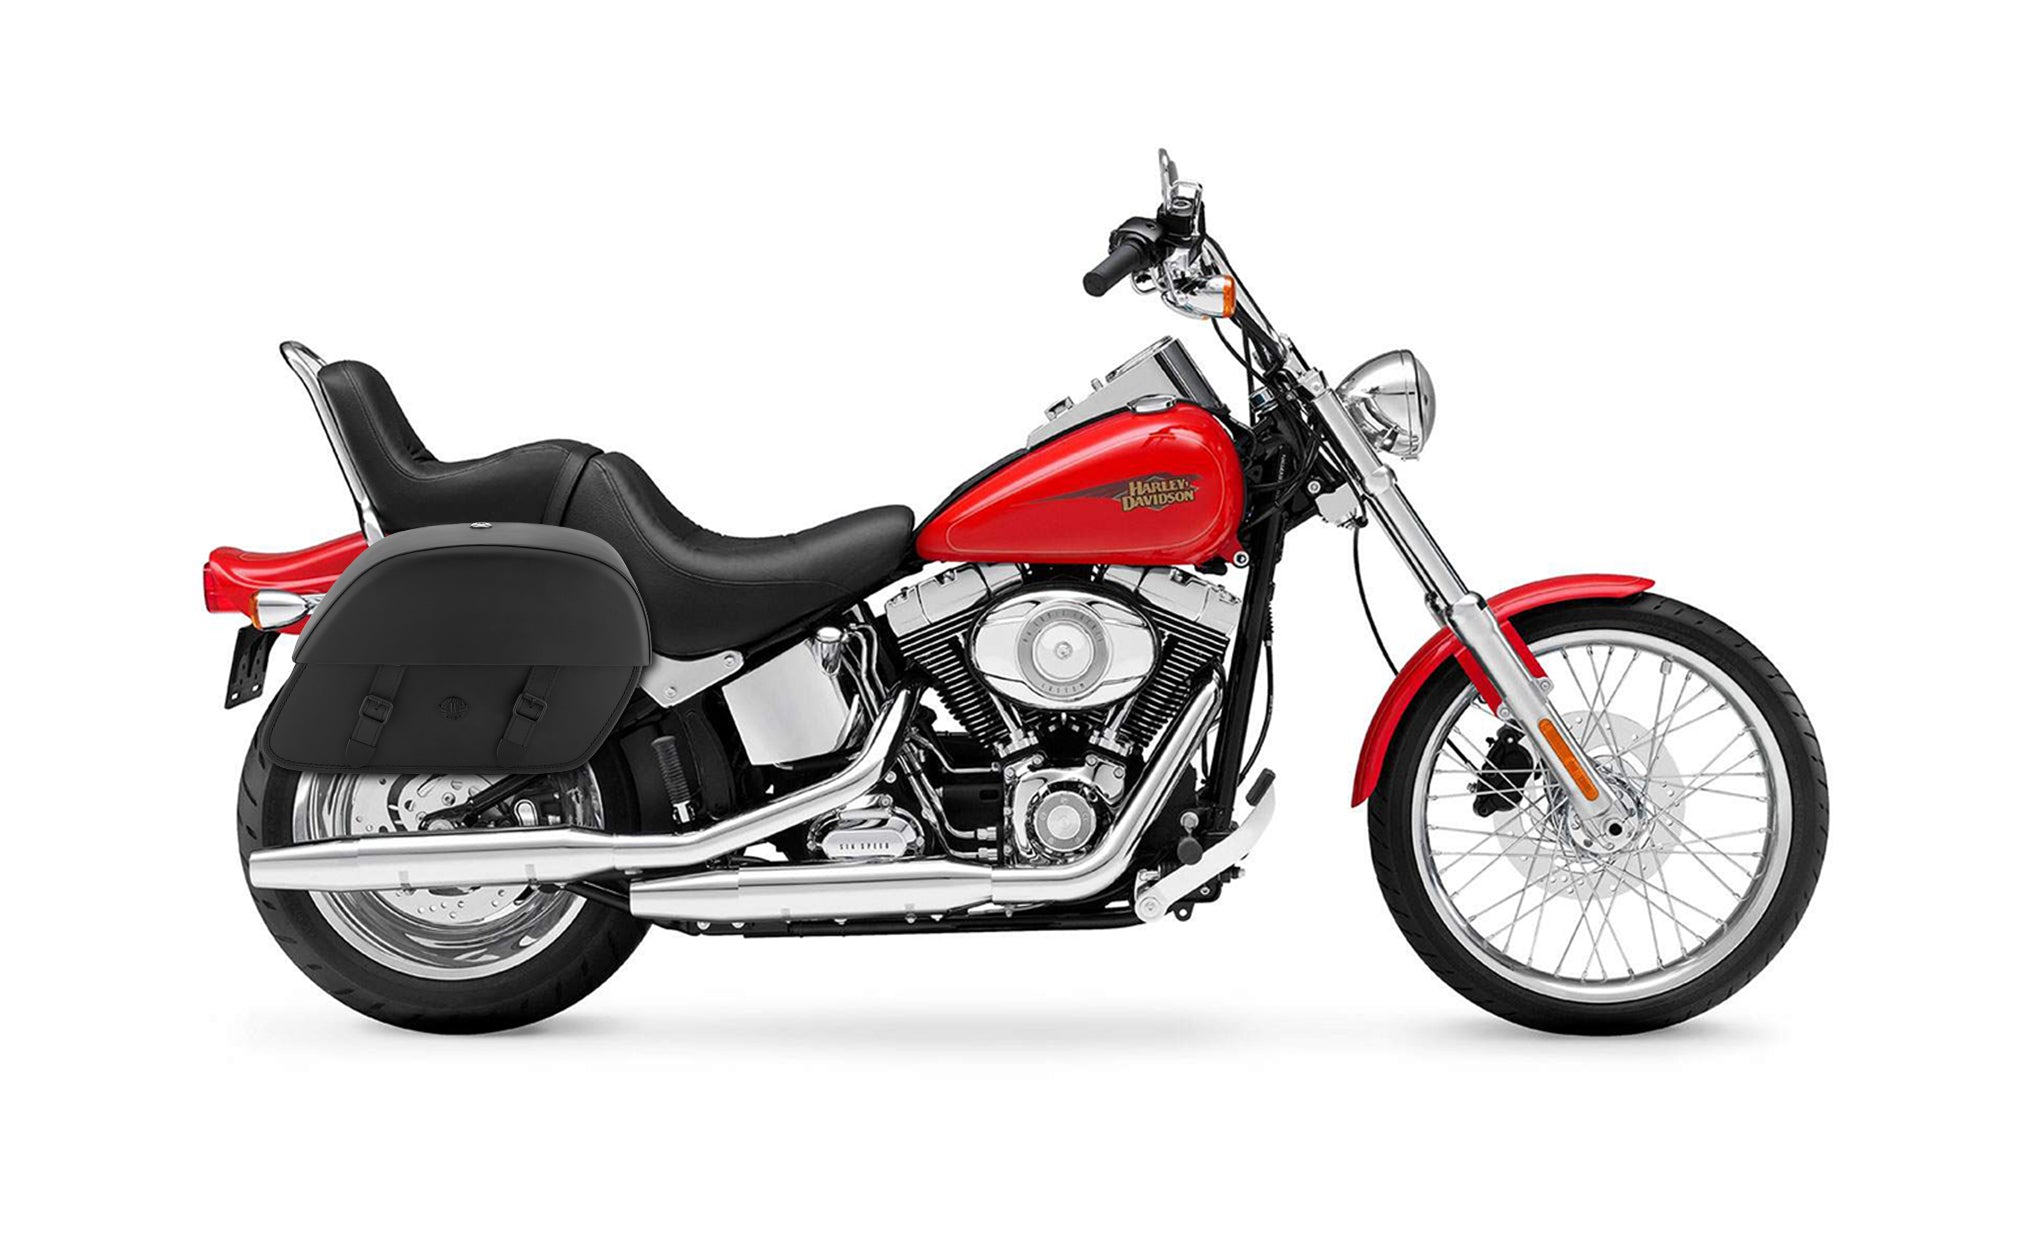 28L - Baelor Medium Motorcycle Saddlebags for Harley Softail Custom FXSTC @expand